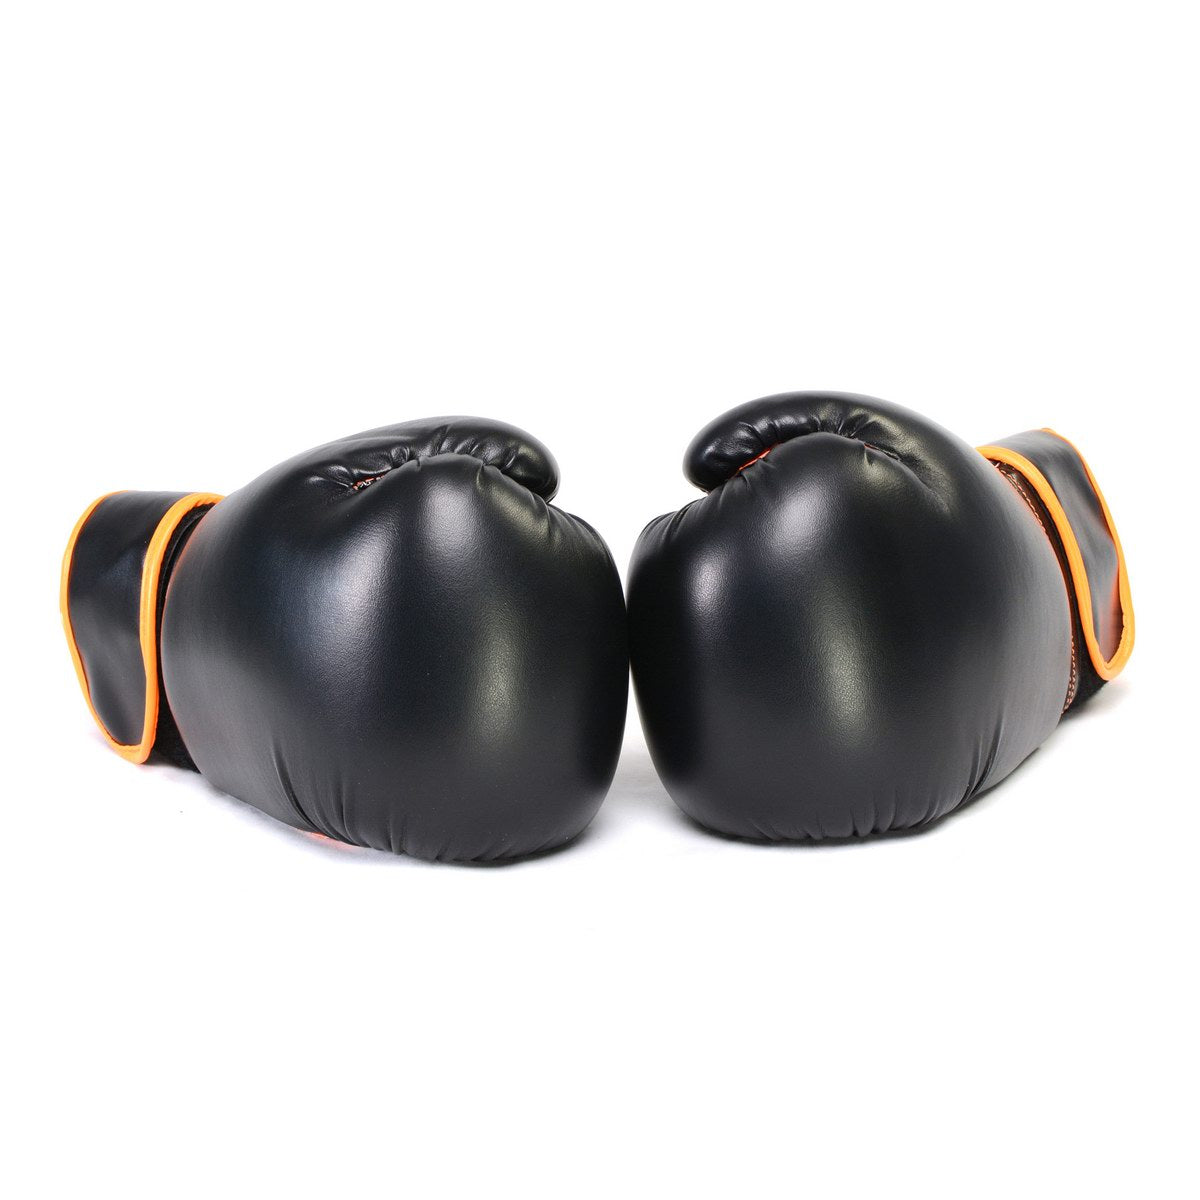 X-Fitness XF2000 Gel Boxing Kickboxing Punching Bag Gloves-BLK/ORANGE